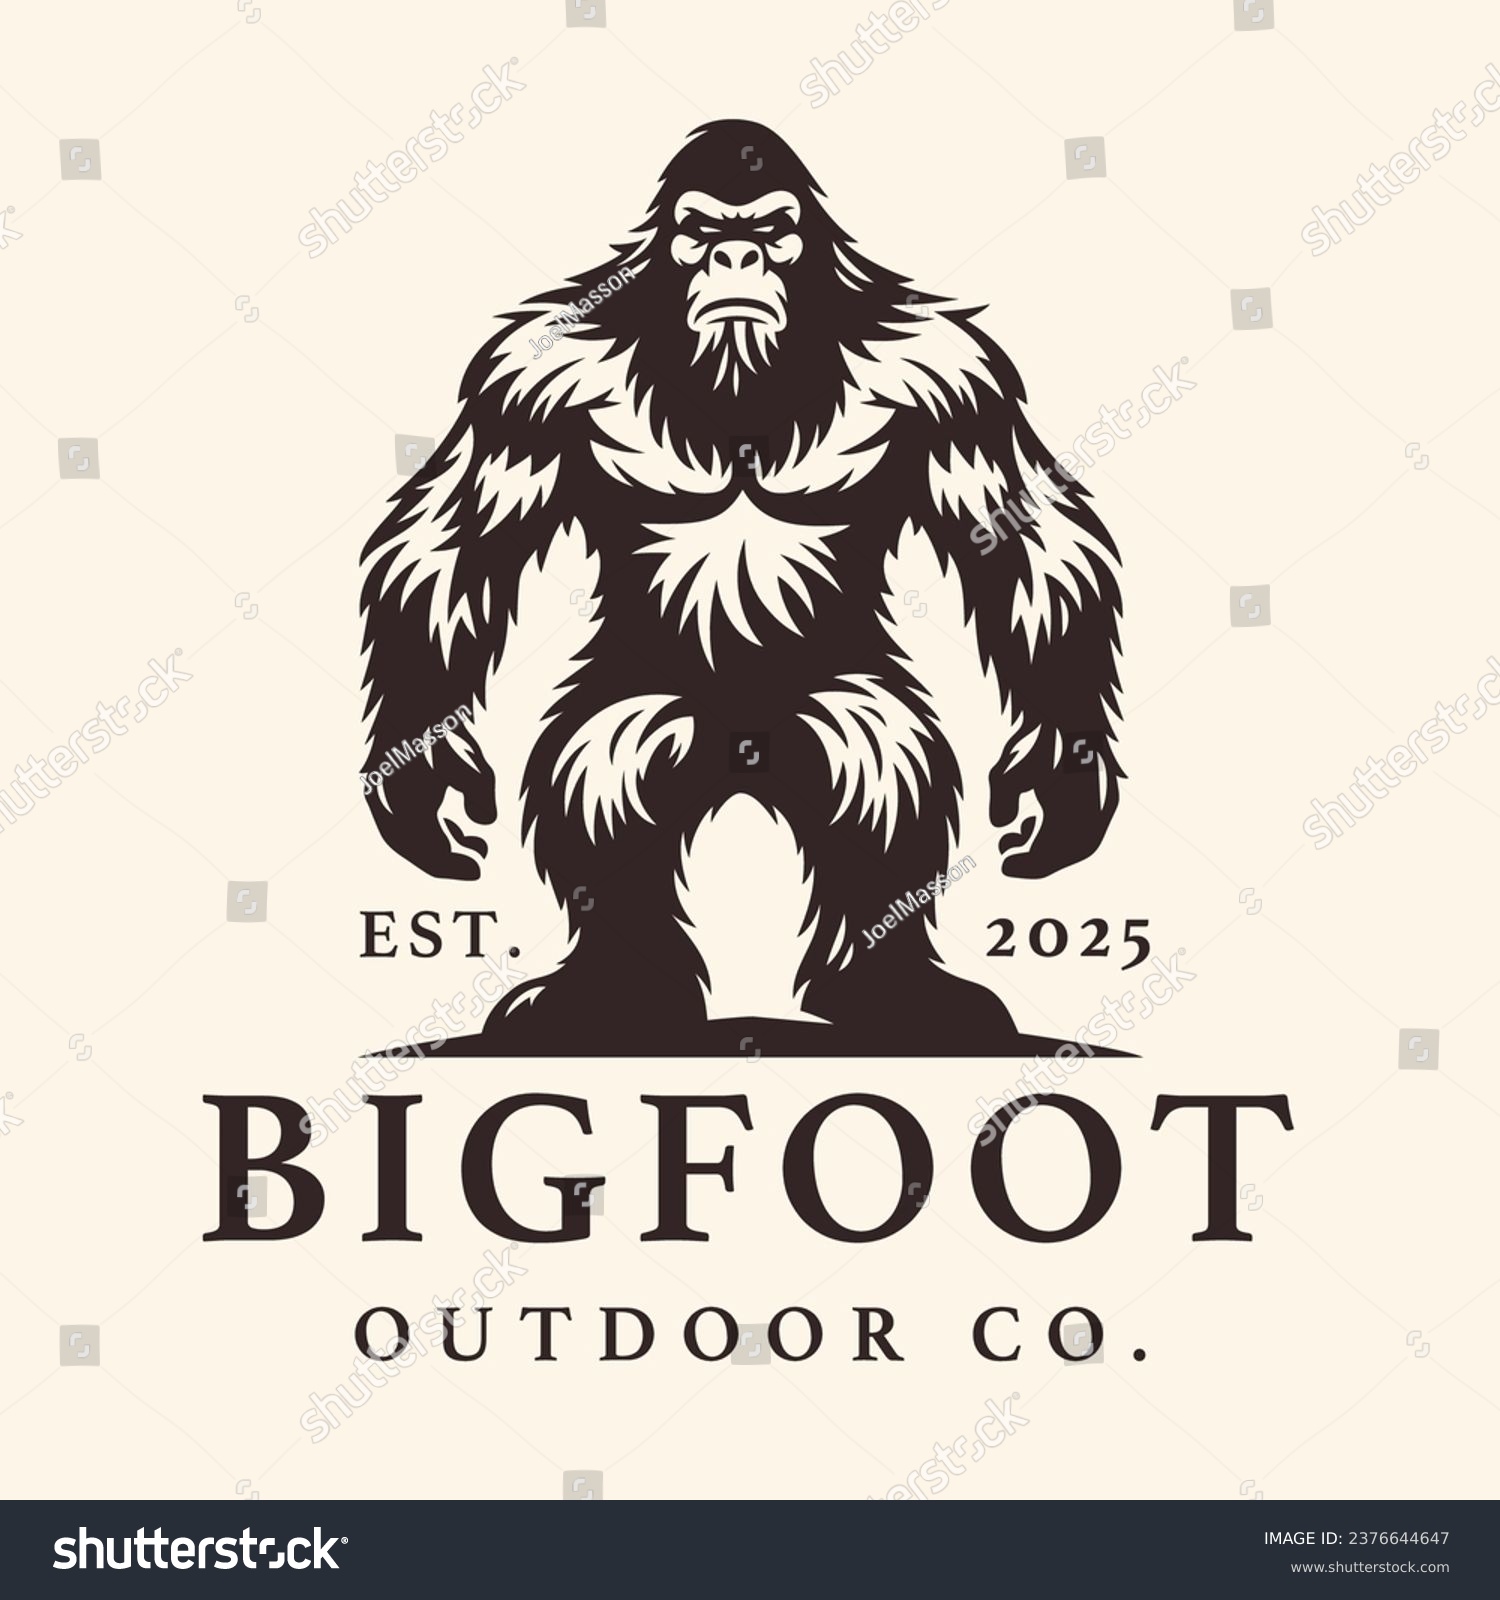 SVG of Bigfoot silhouette logo design. Sasquatch standing brand icon. Yeti symbol. Wood ape emblem. Mythical cryptid creature vector illustration. svg